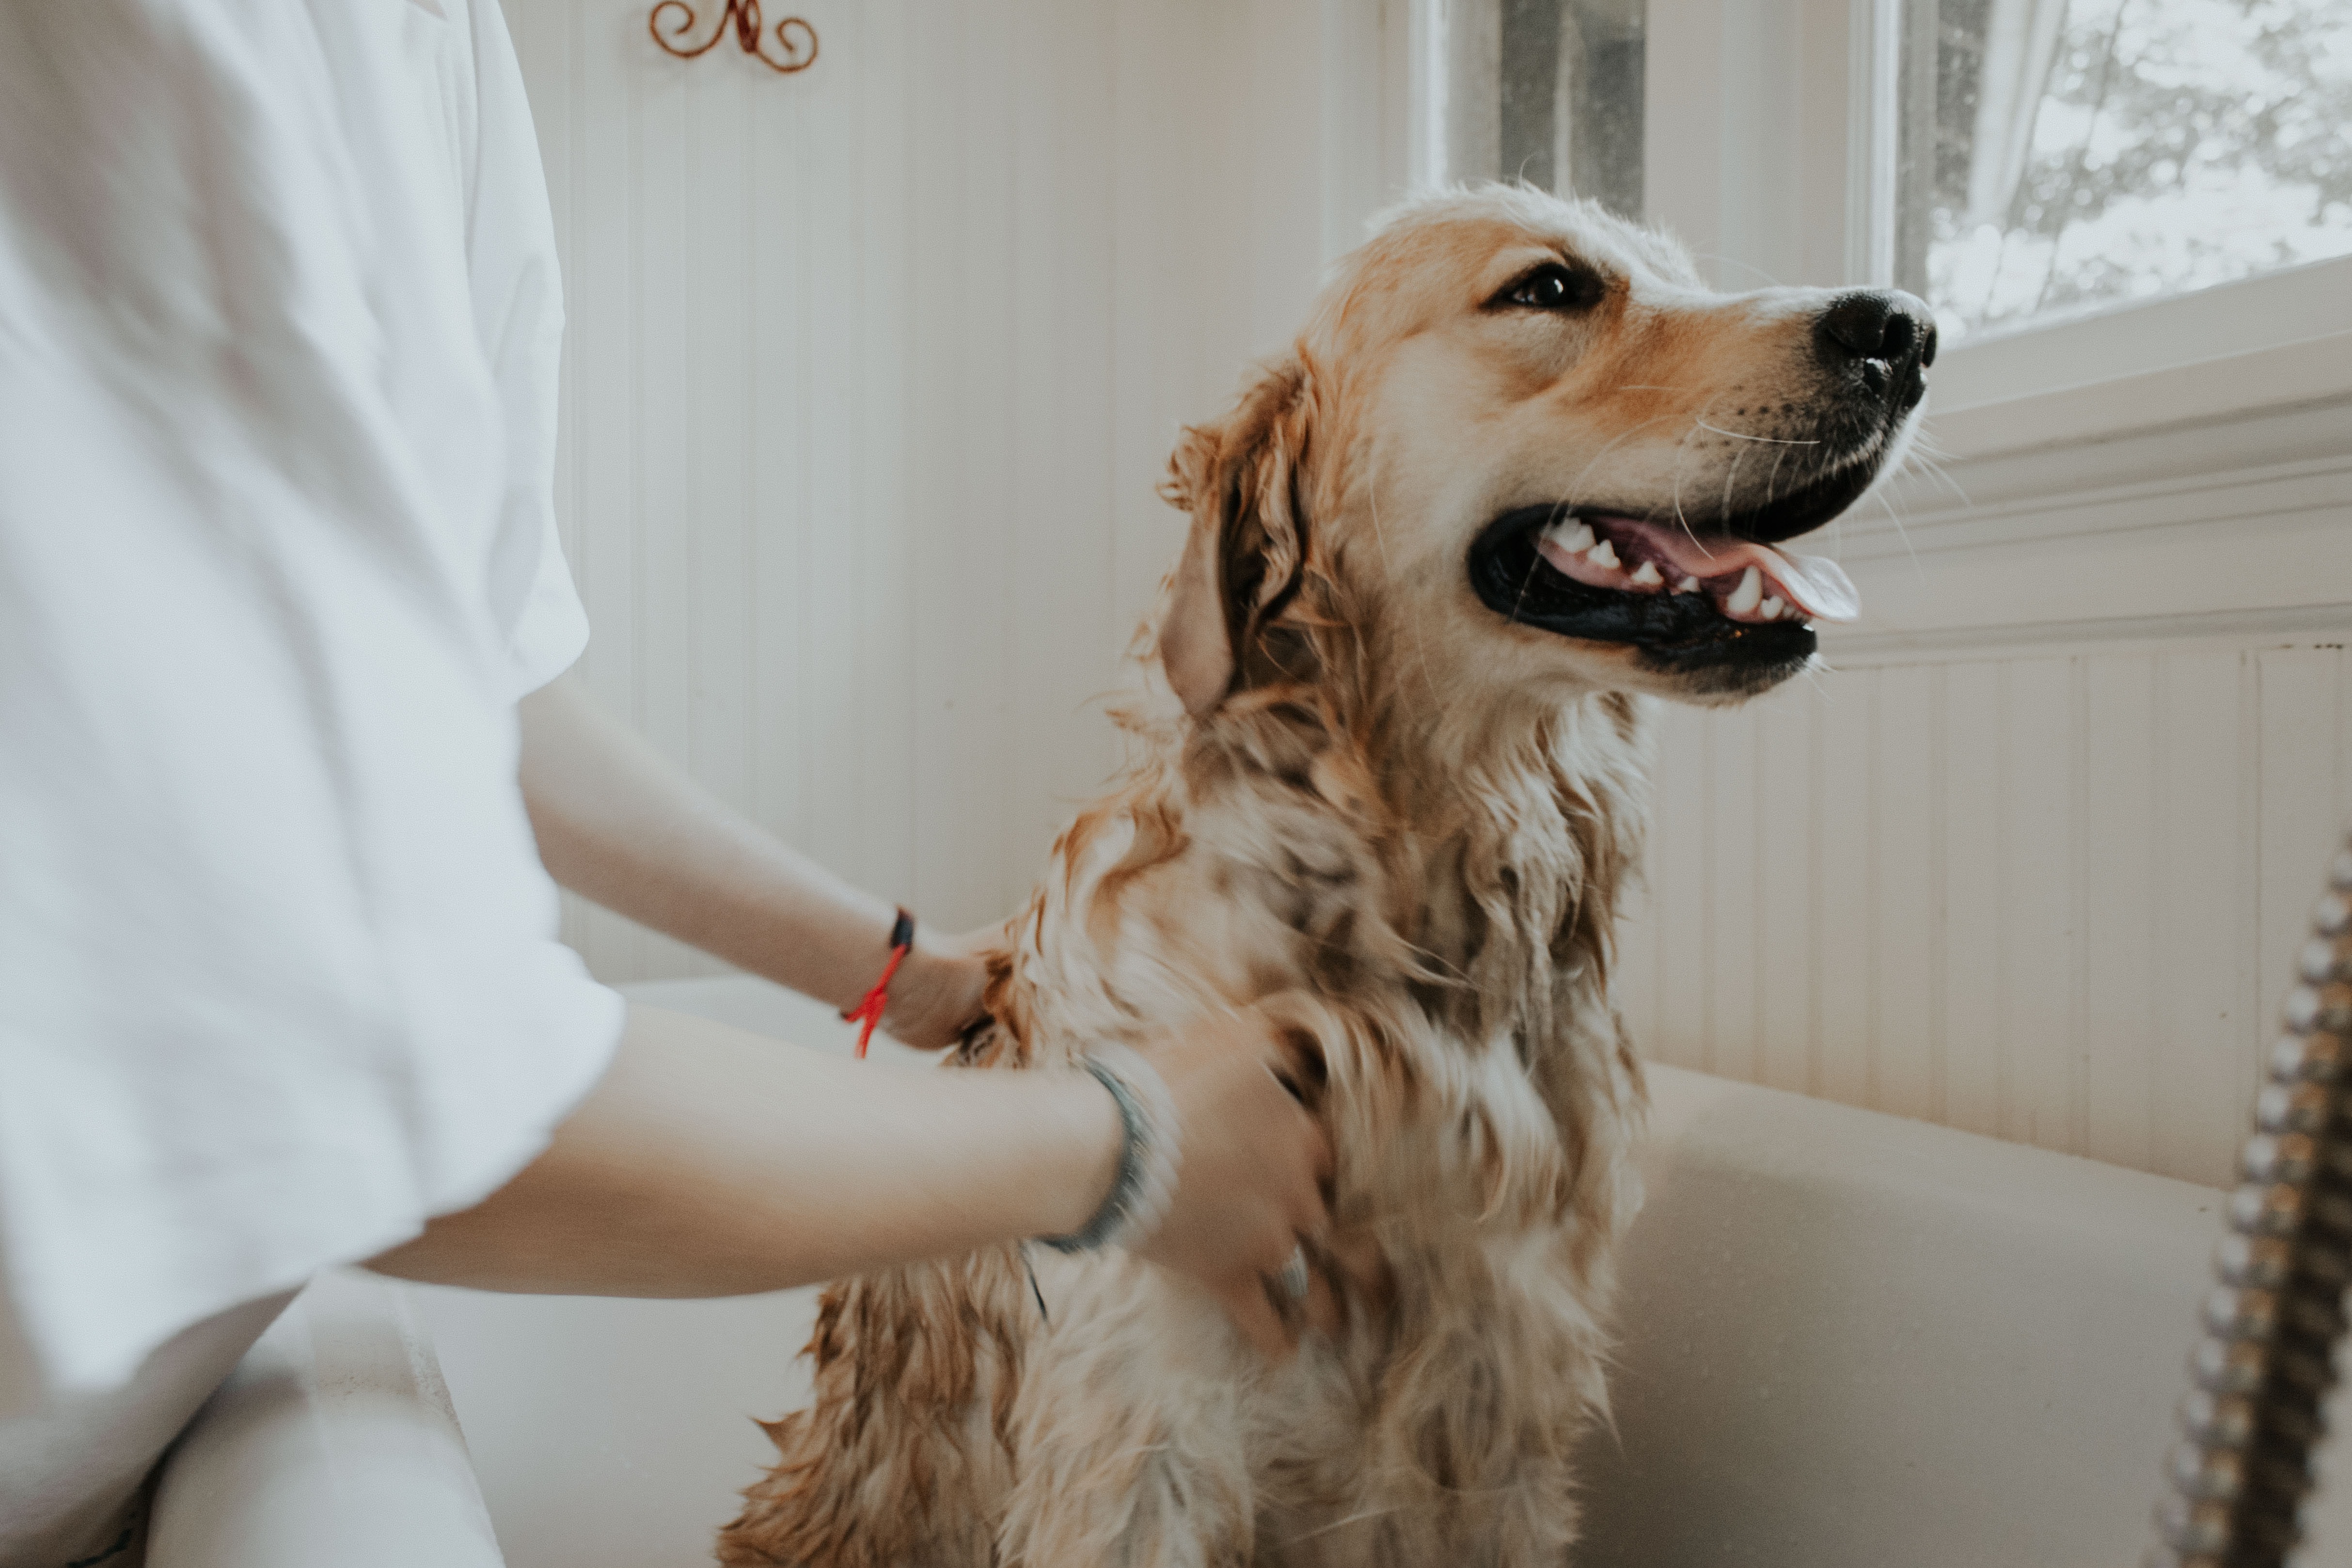 Labrador dog being groomed to reduce pet shedding